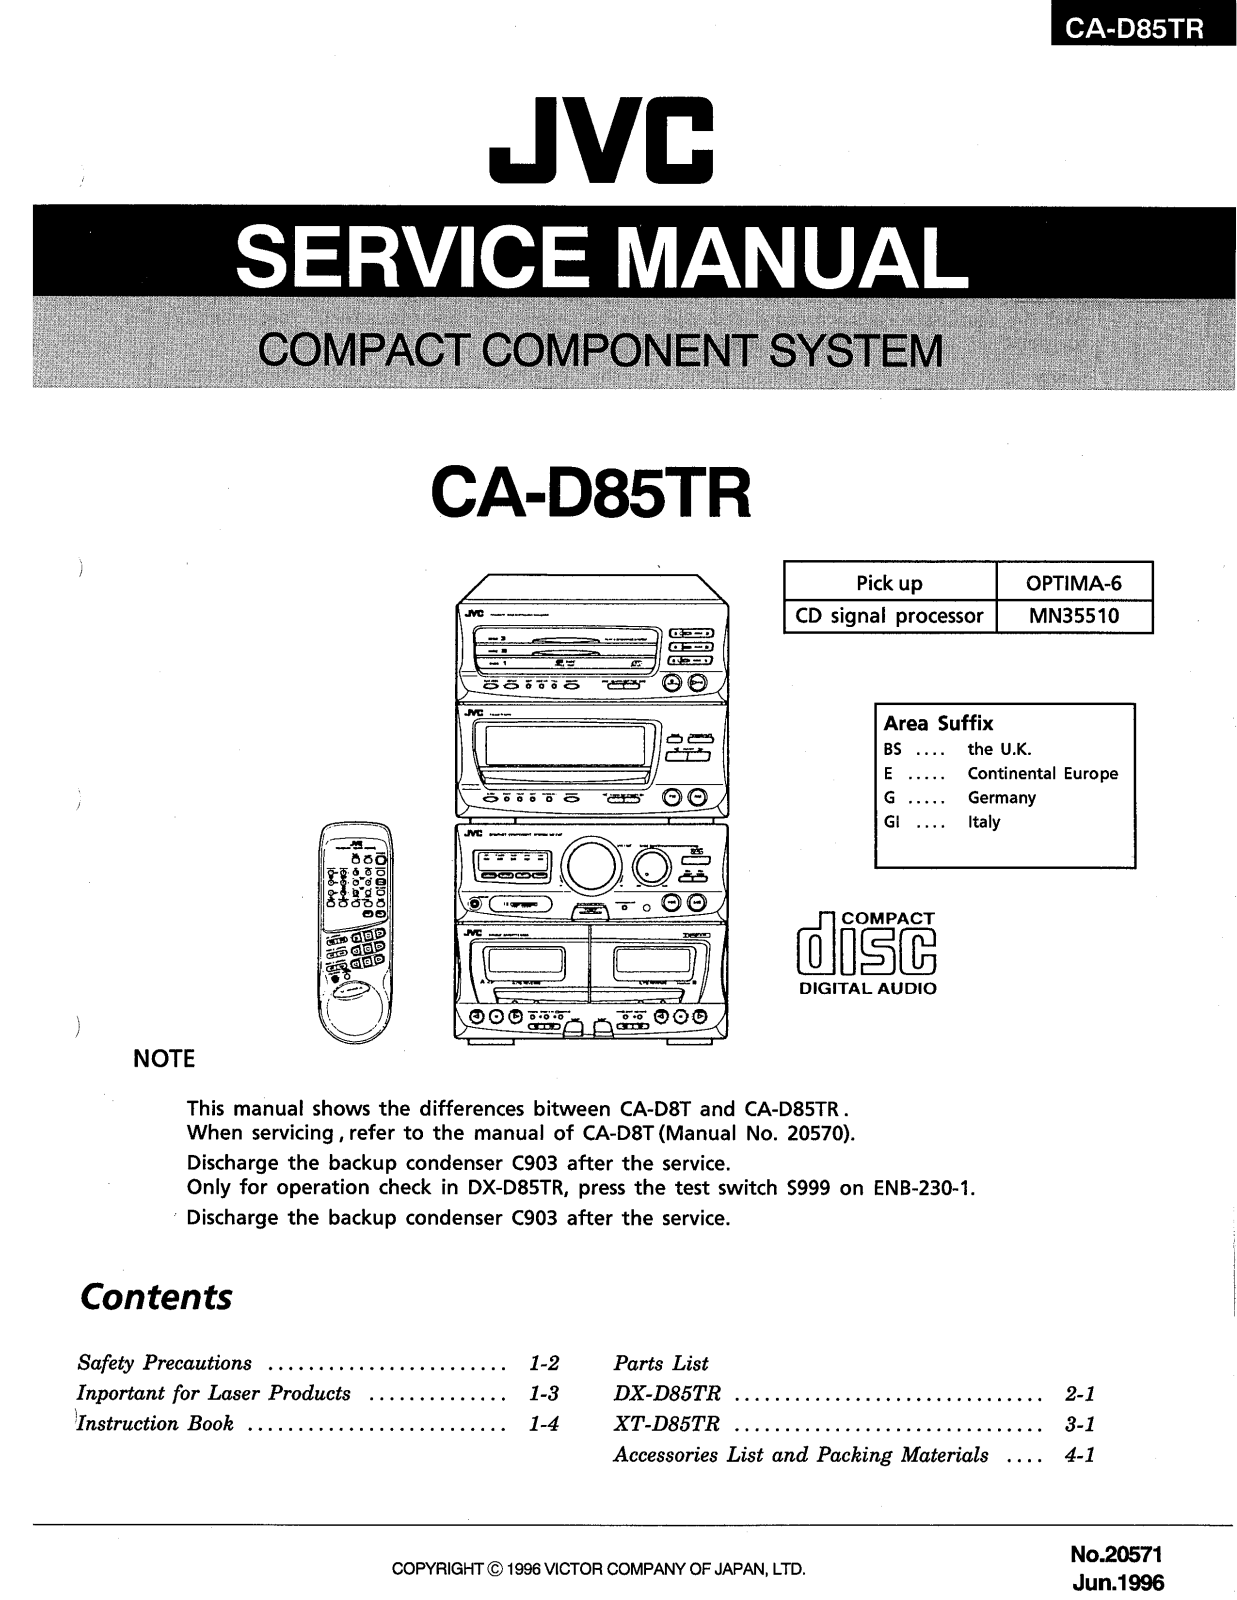 JVC CA-D85TR Service Manual